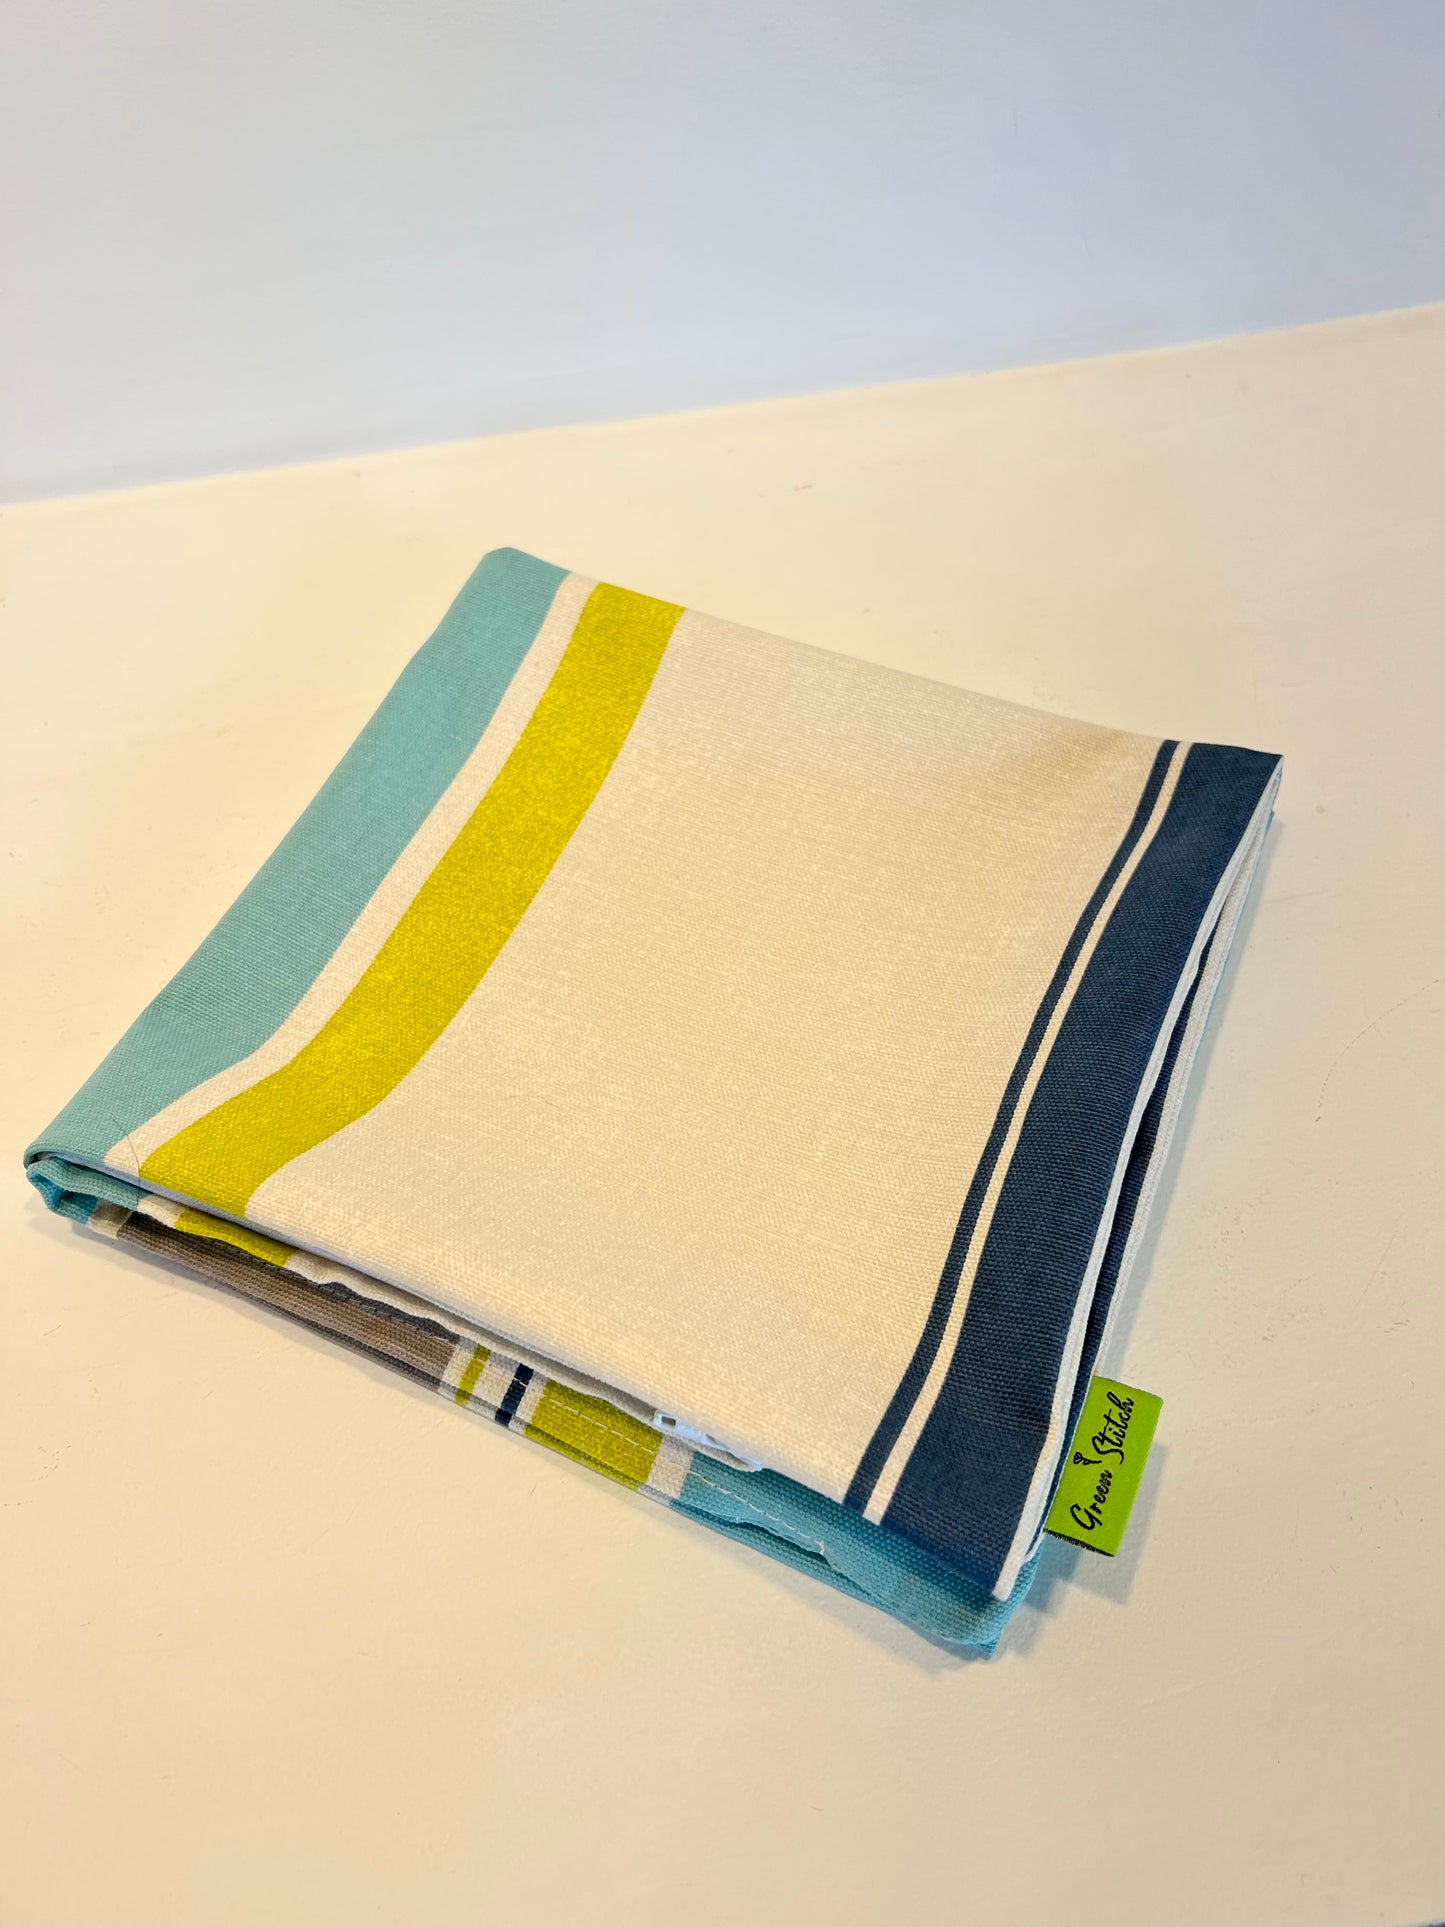 Pembroke Stripe Set  - Cushion Cover Set